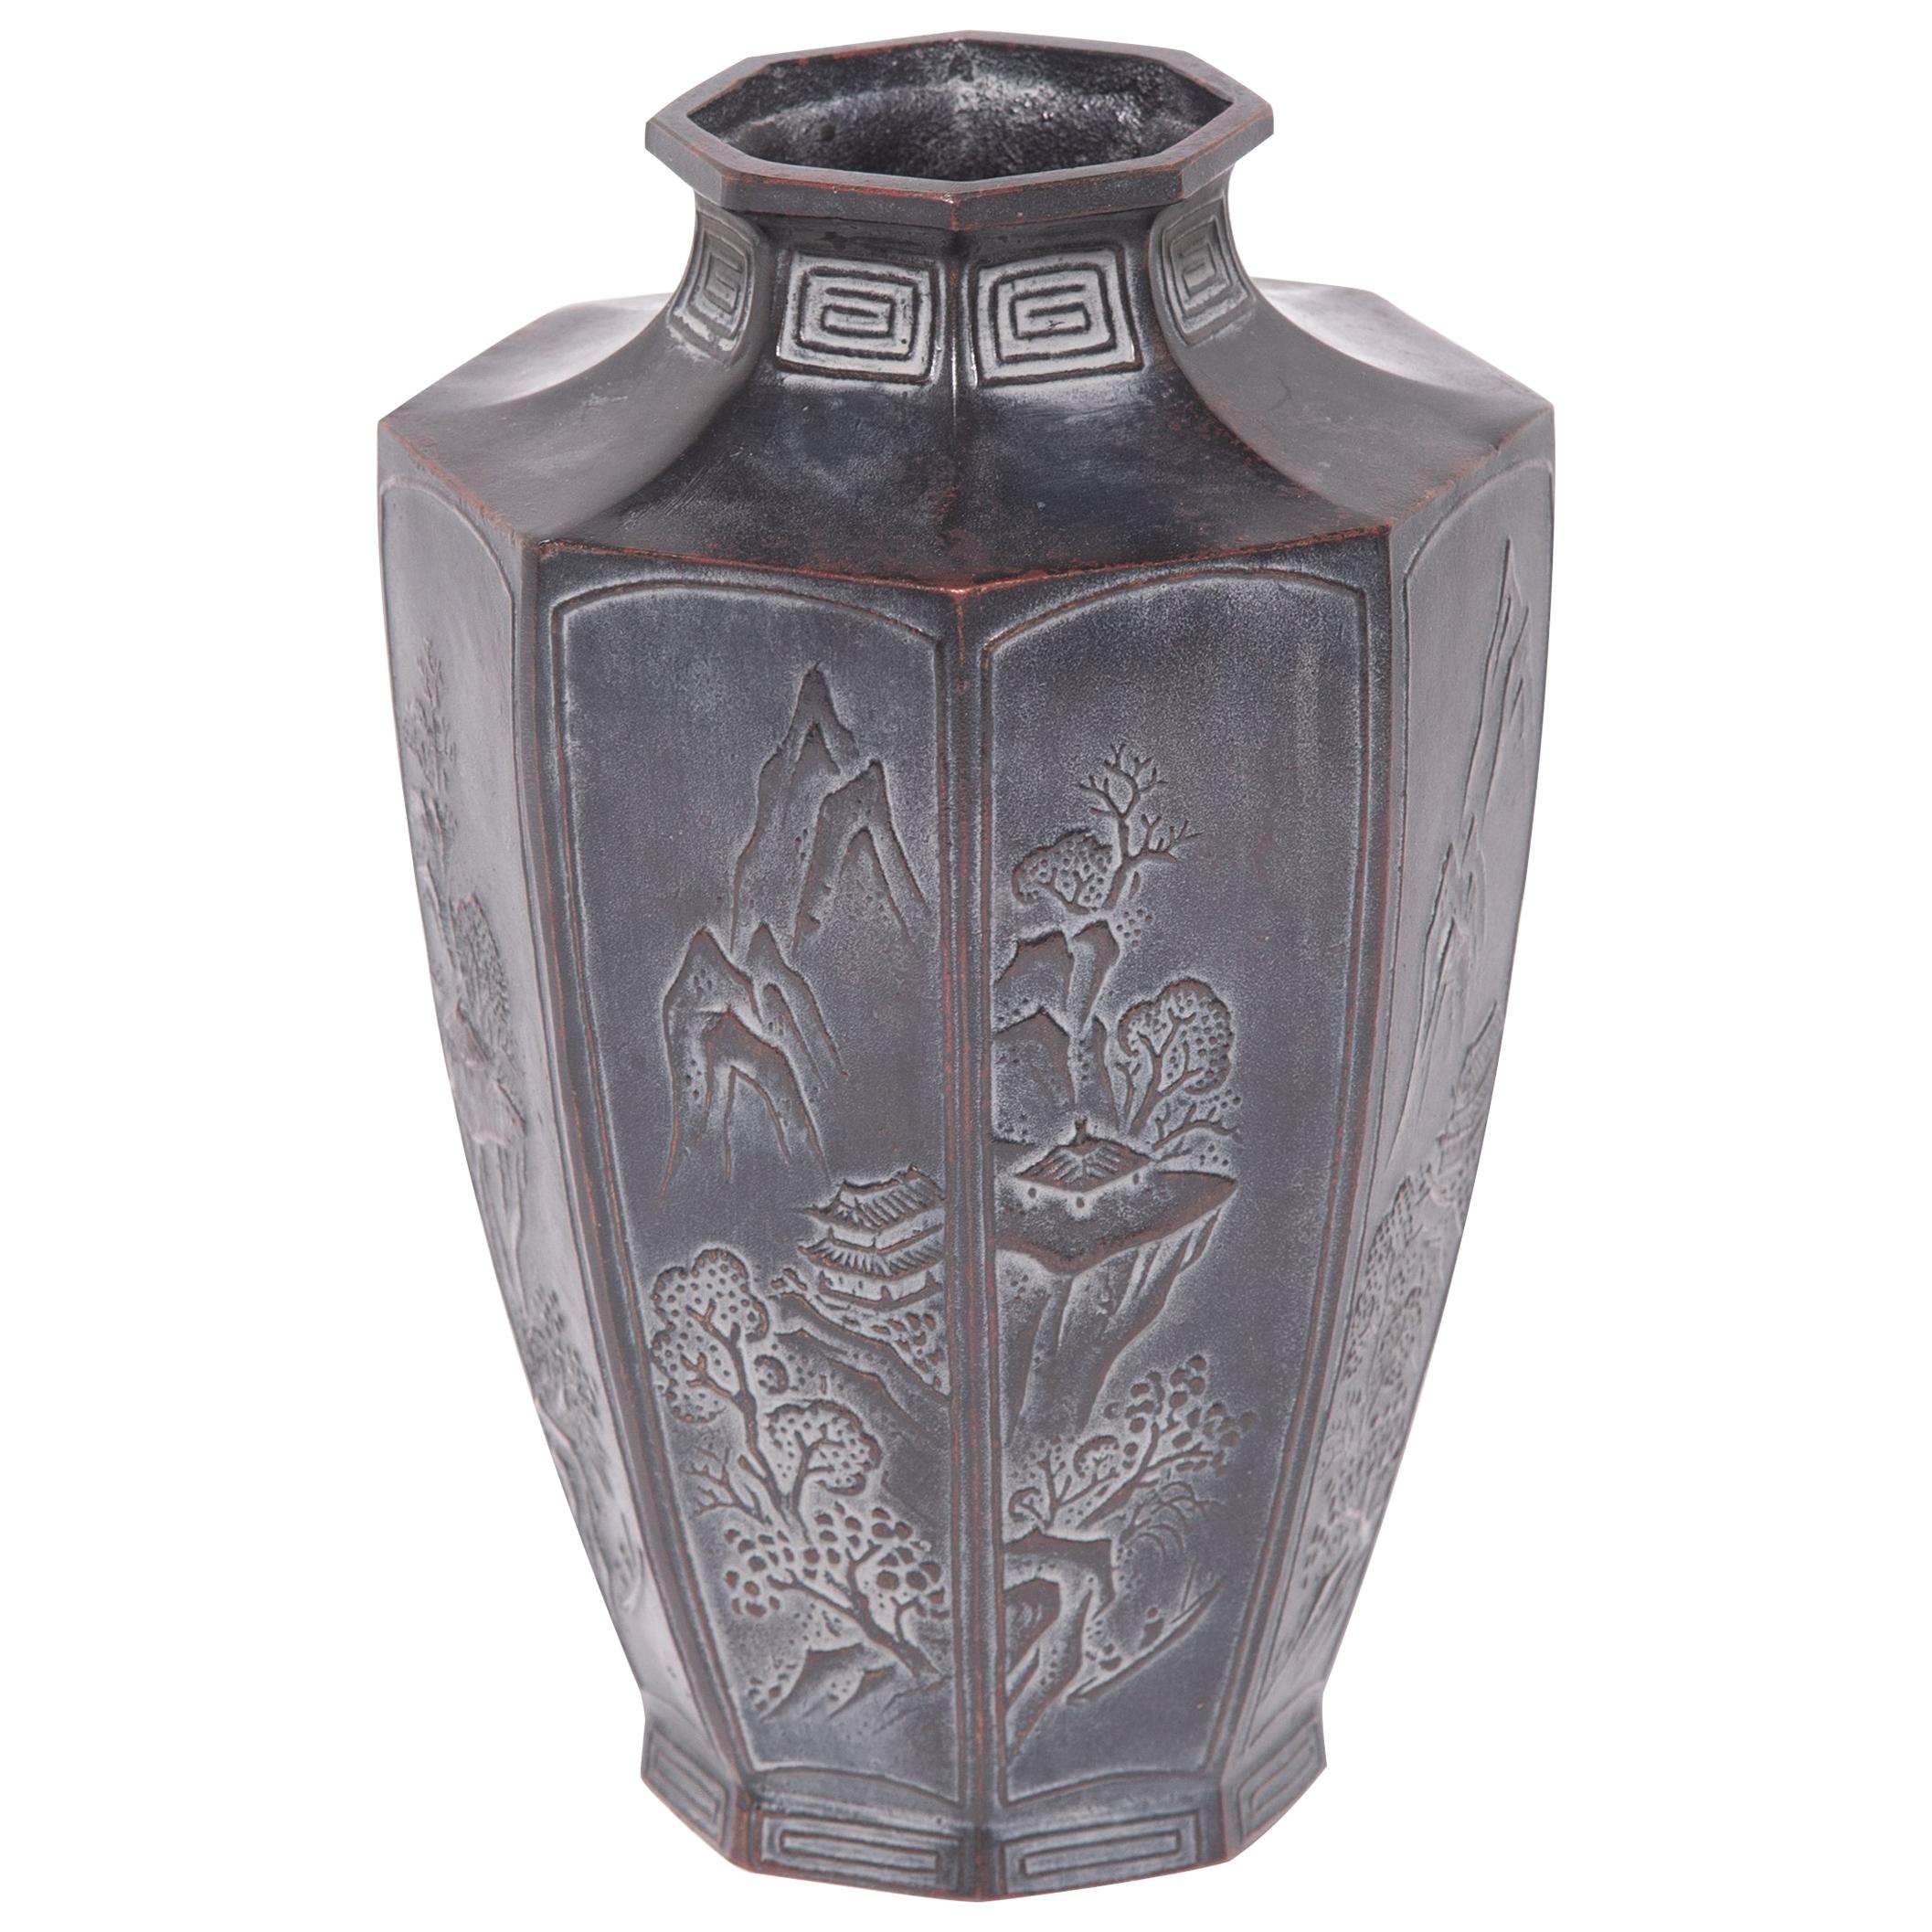 Early 20th Century Japanese Octagonal Zinc Vase